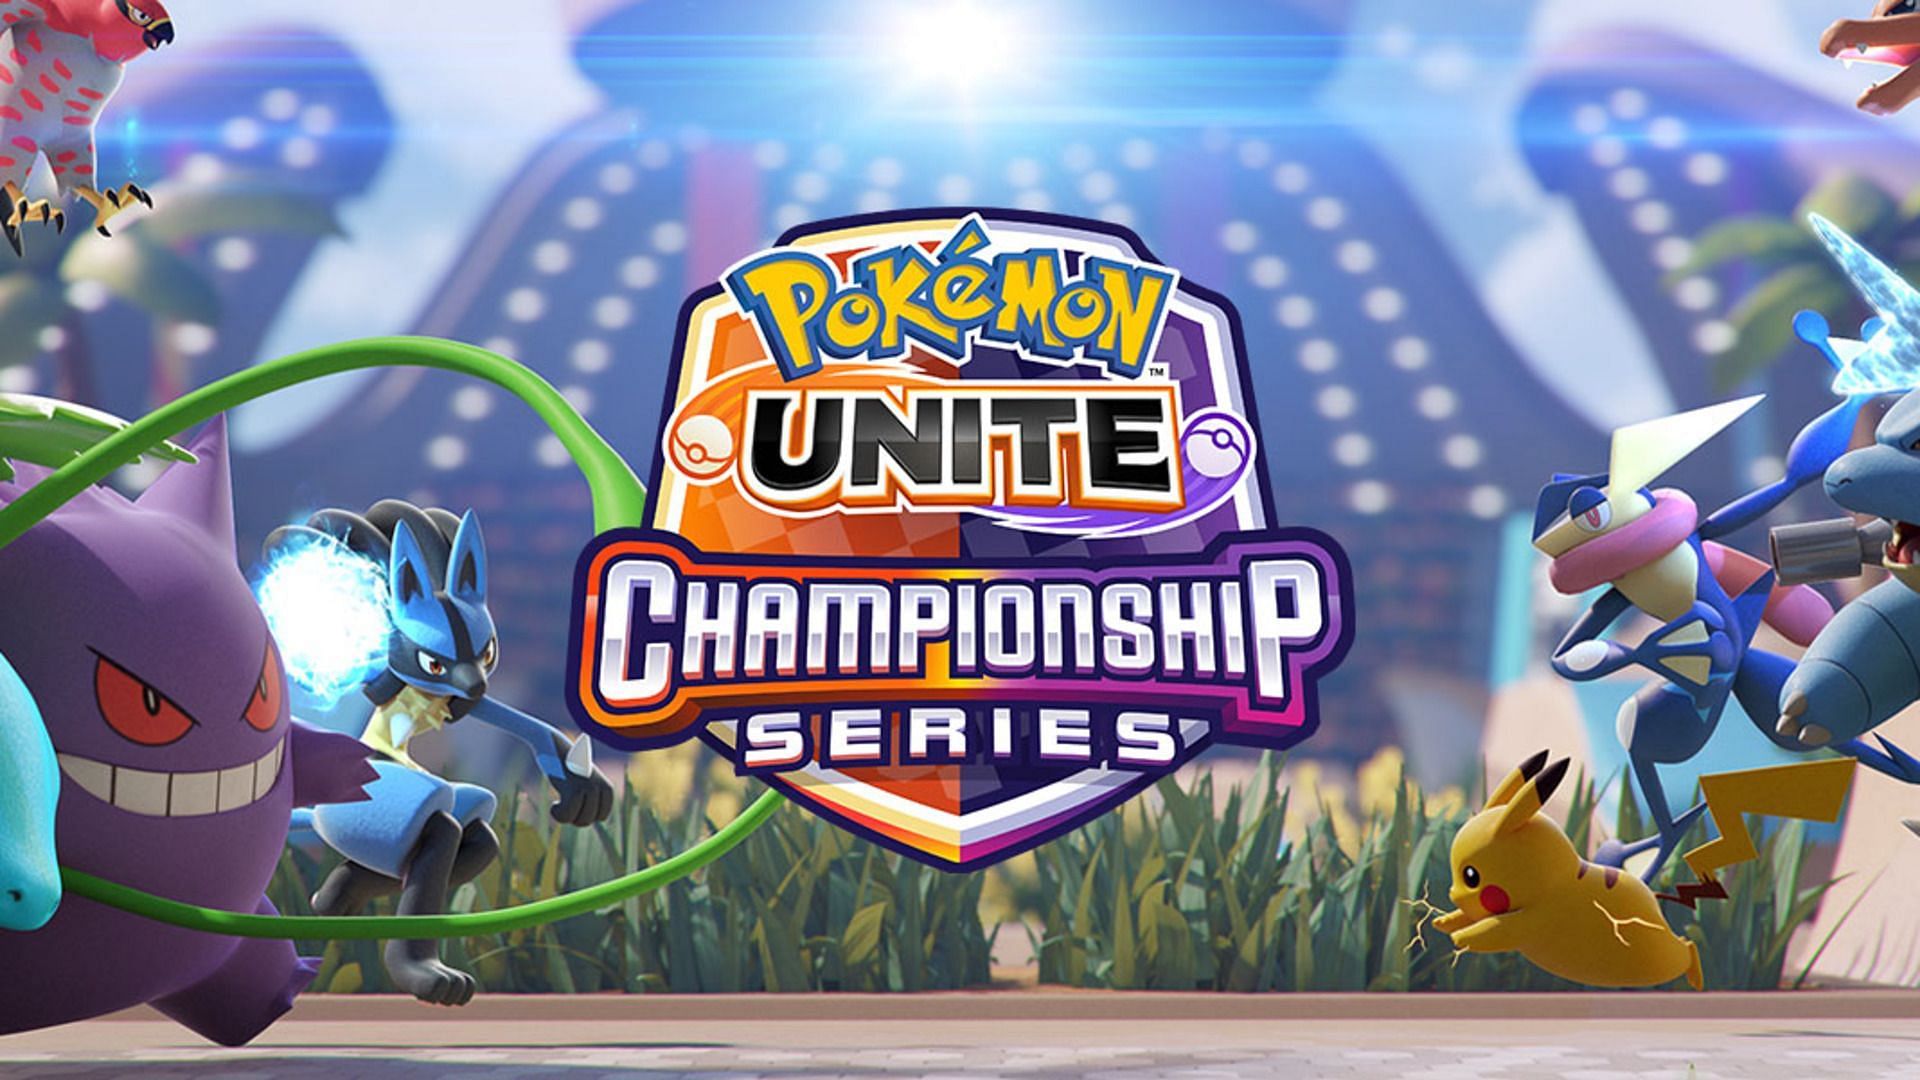 Pokémon UNITE  Championship Series